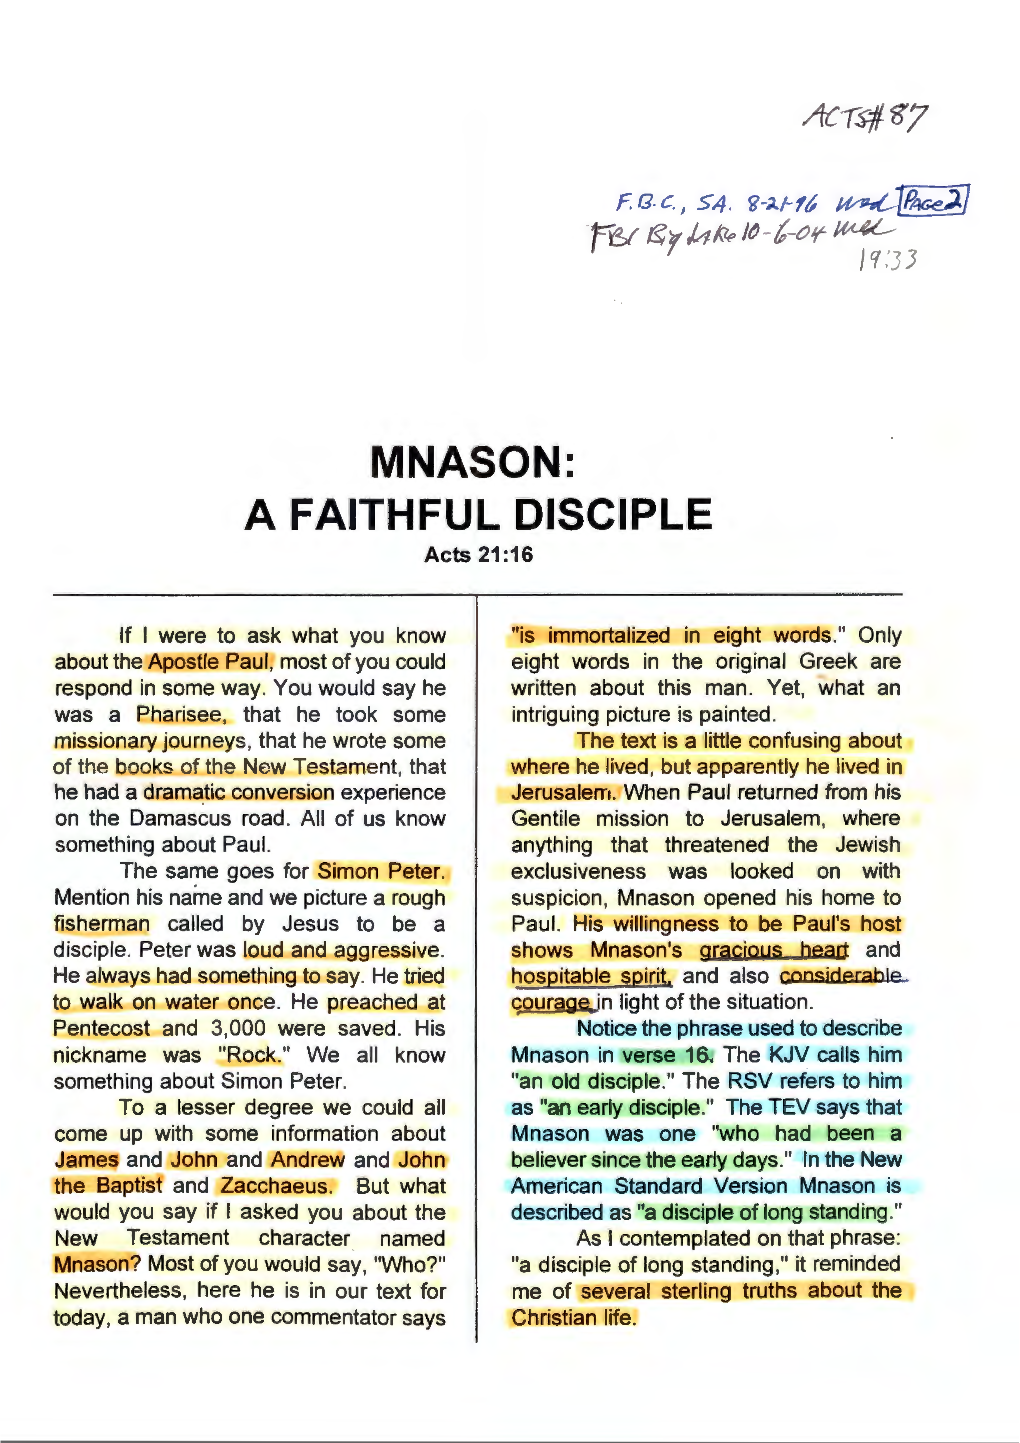 MNASON: a FAITHFUL DISCIPLE Acts 21:16